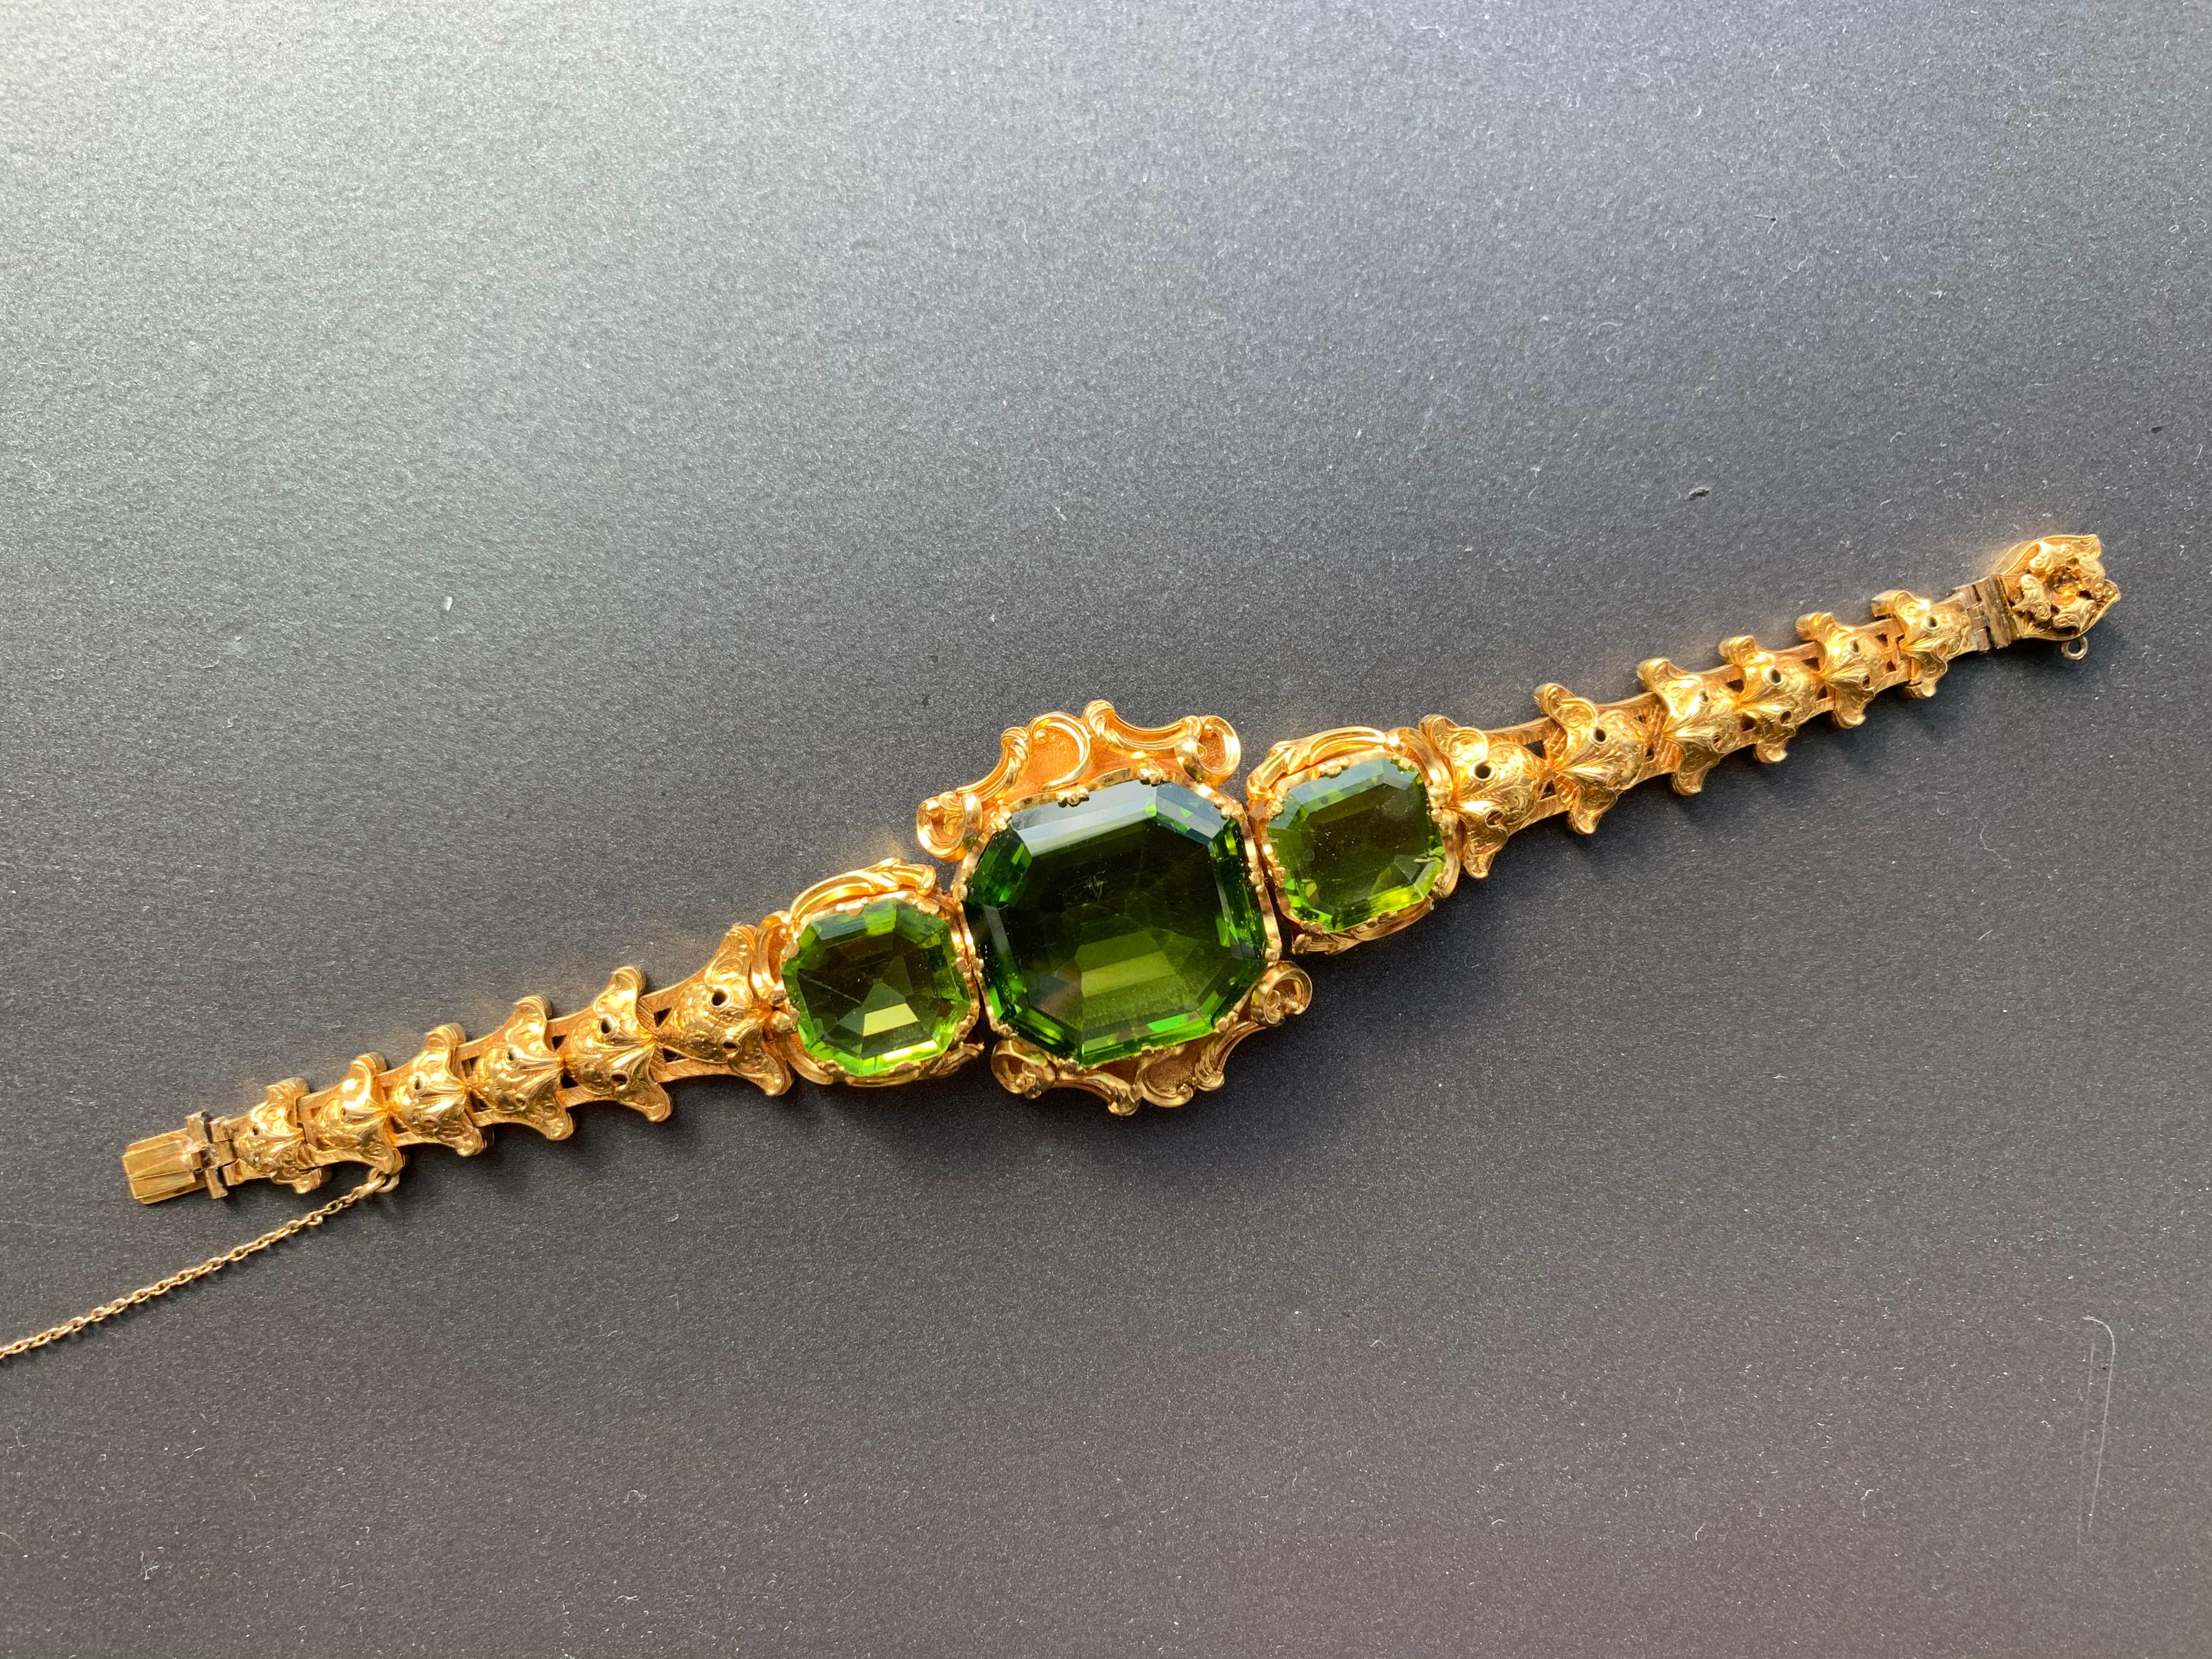 Antique Peridot Gold Bracelet
Made Circa 1900
Possibly Austrian origin
7 inches long
39.7 grams